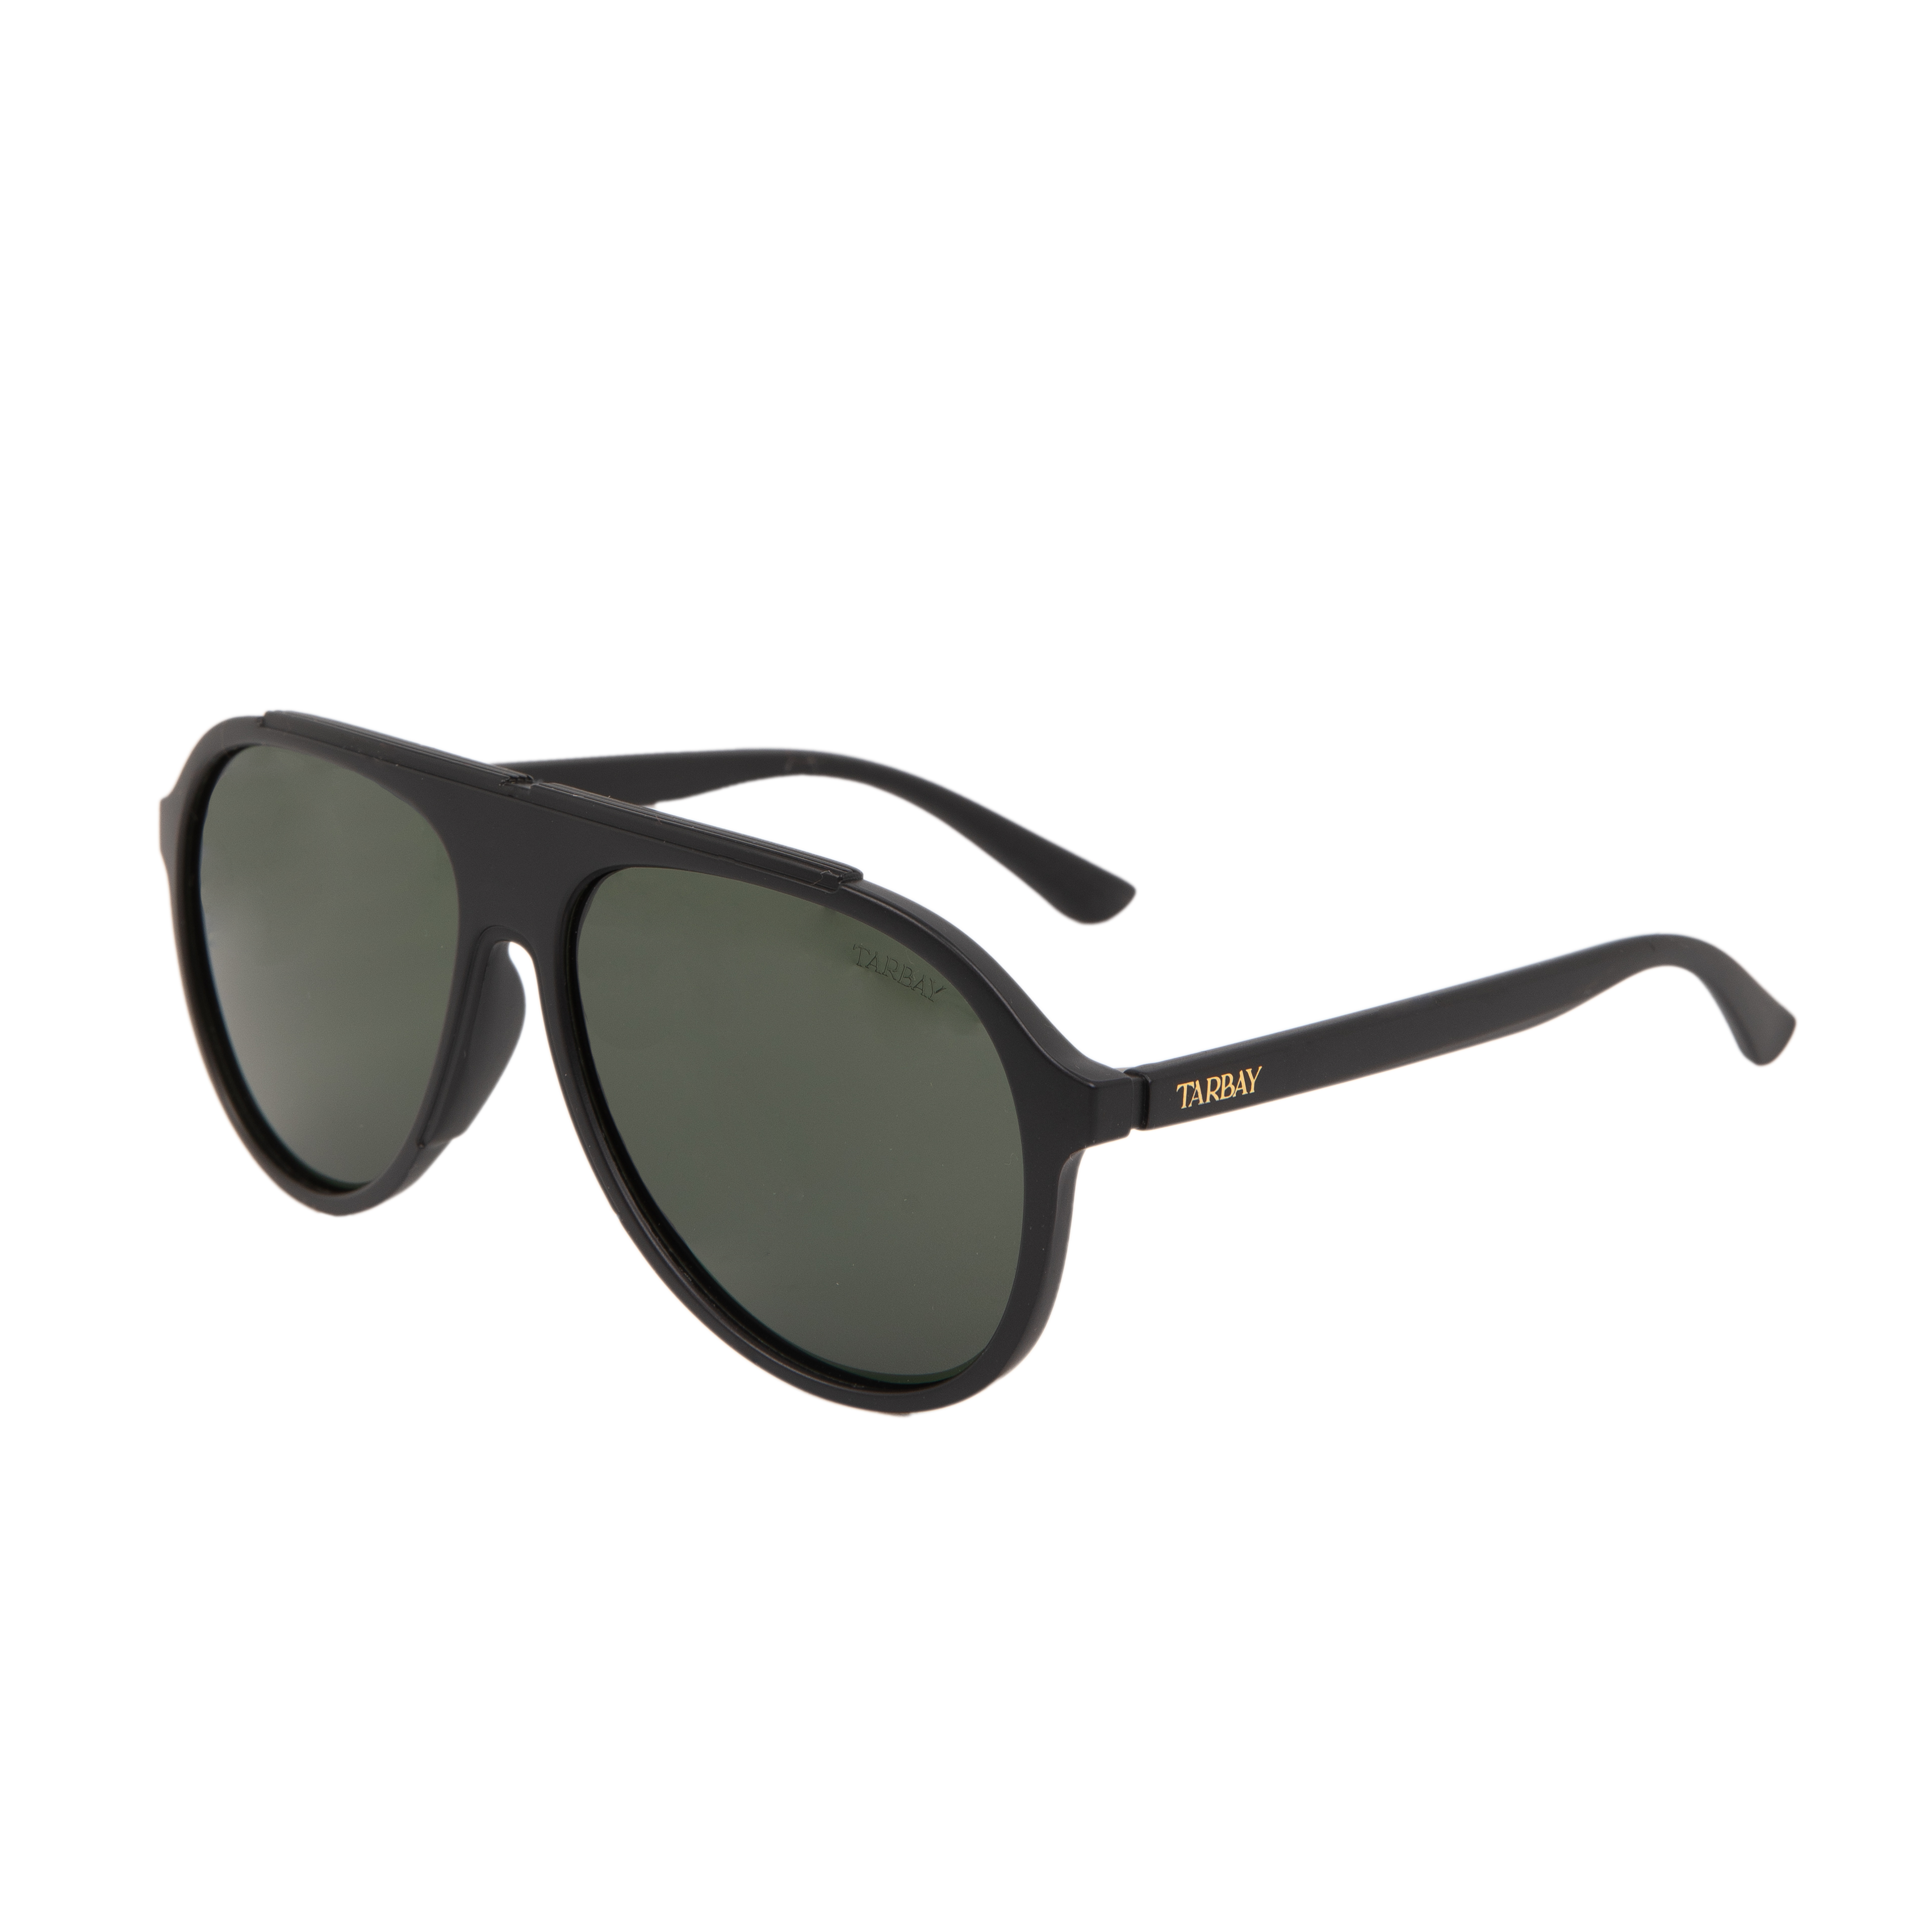 Parasol #11 - Black SunGlasses TARBAY   